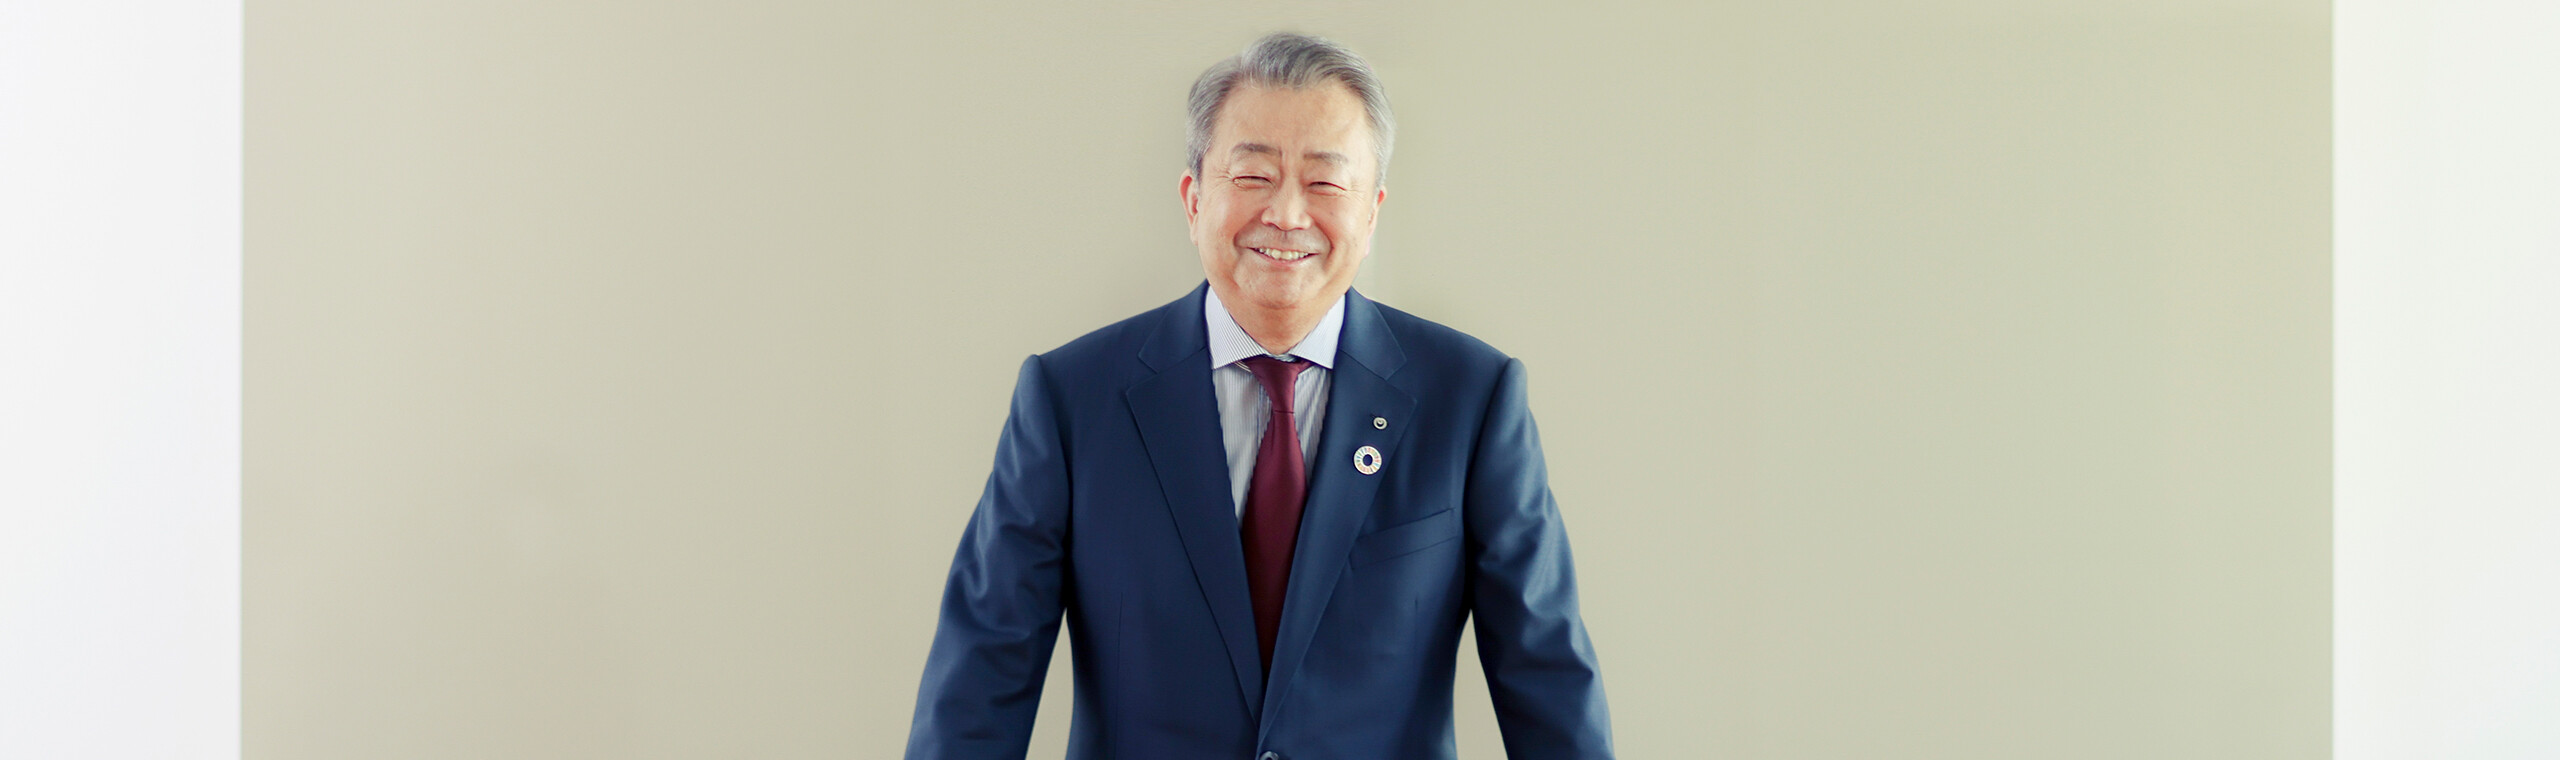 Jun Sawada President and Chief Executive Officer